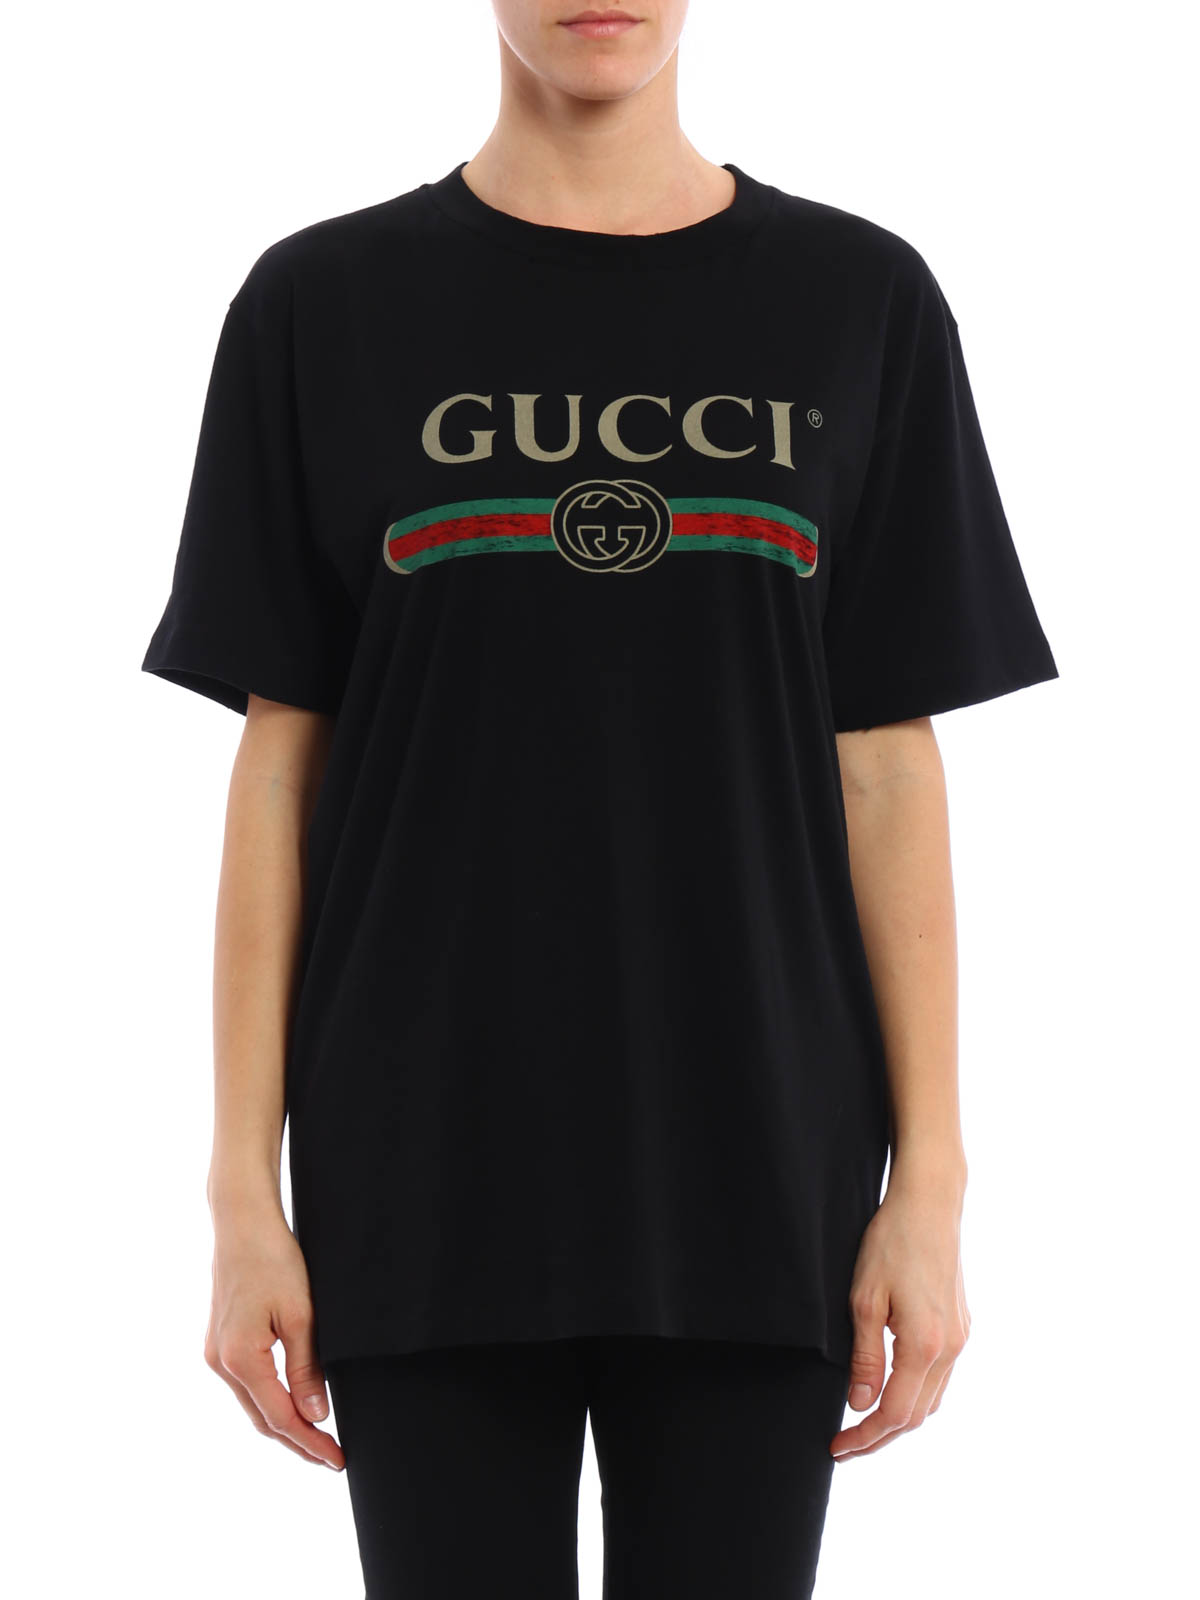 Gucci Logo Print And Back Patch T Shirt تی شرت x5l1948